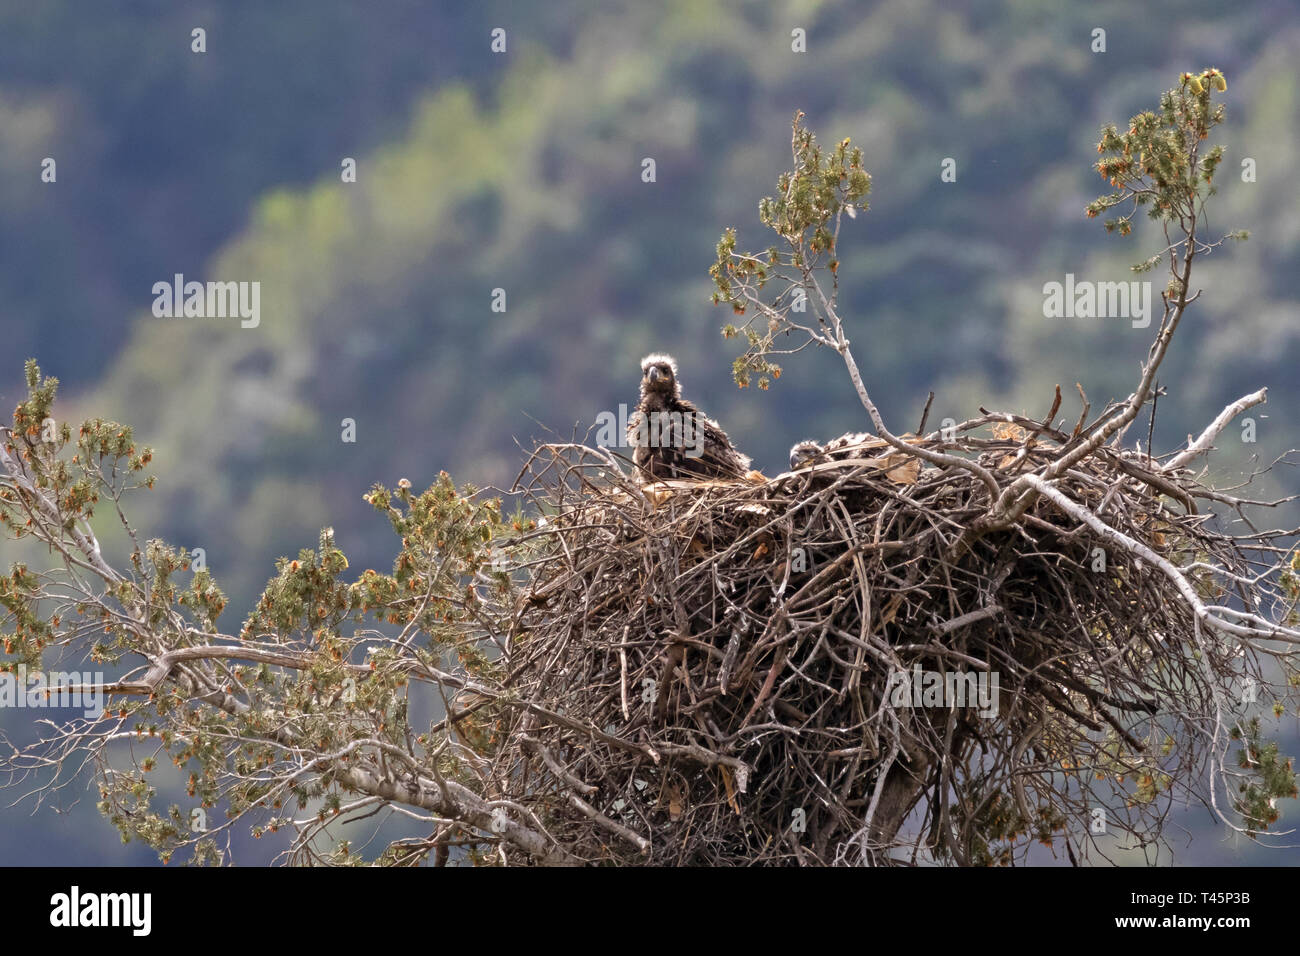 Bald eagle at Los Angeles mountains Stock Photo